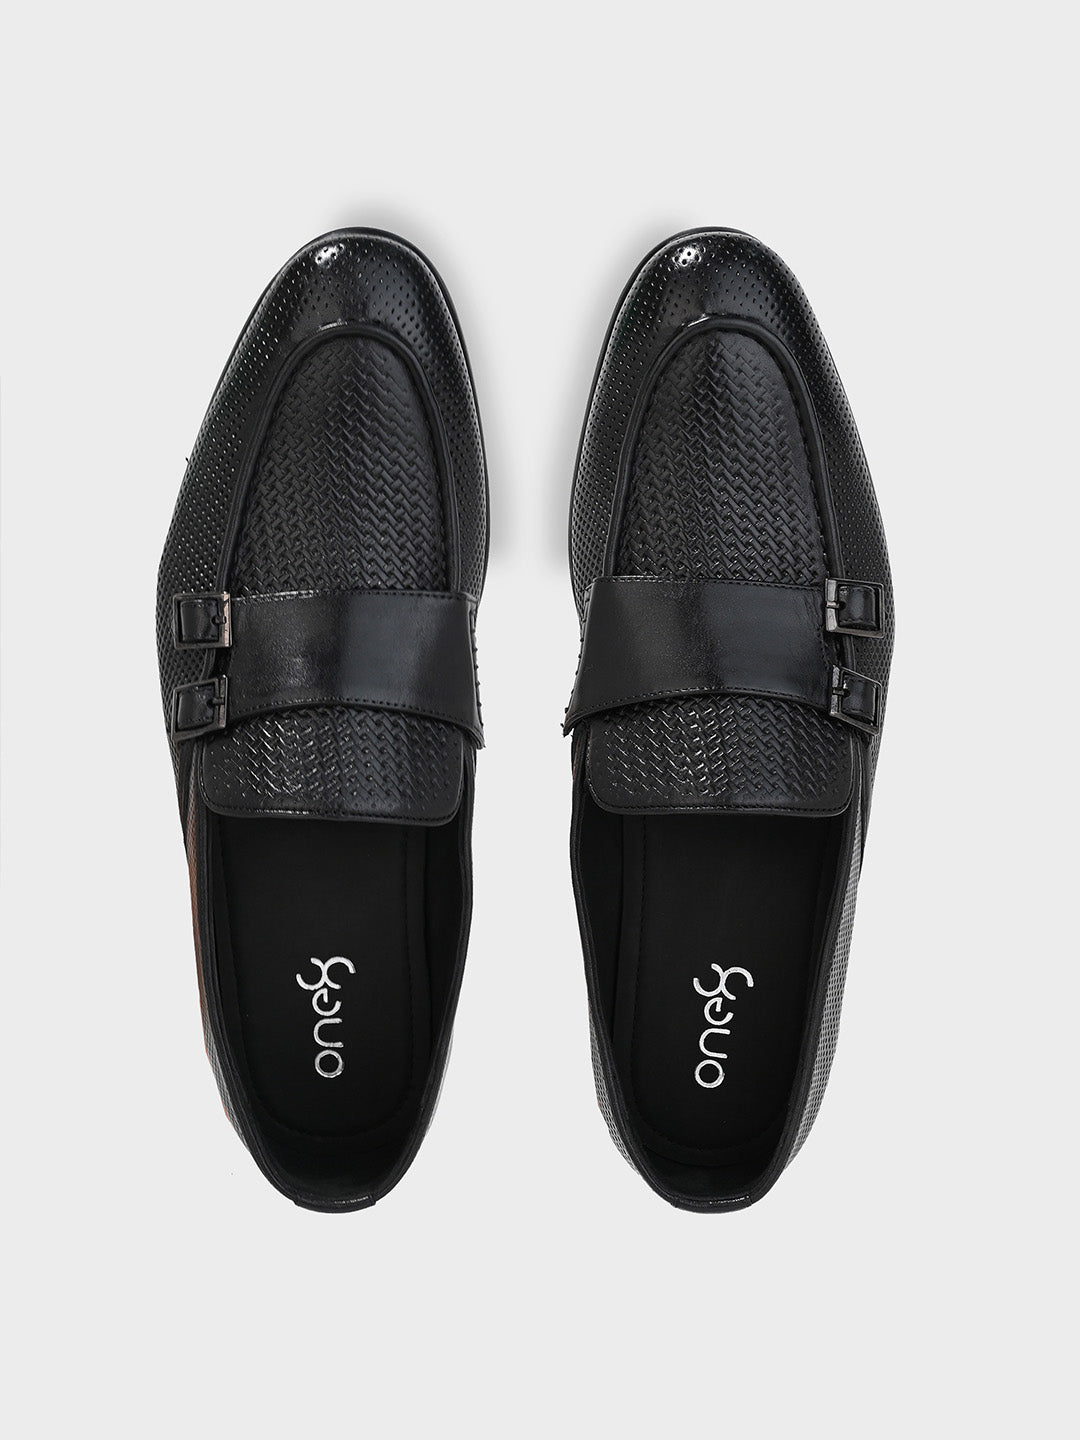 Men's Black Leather Monk Strap Slip-On Shoes